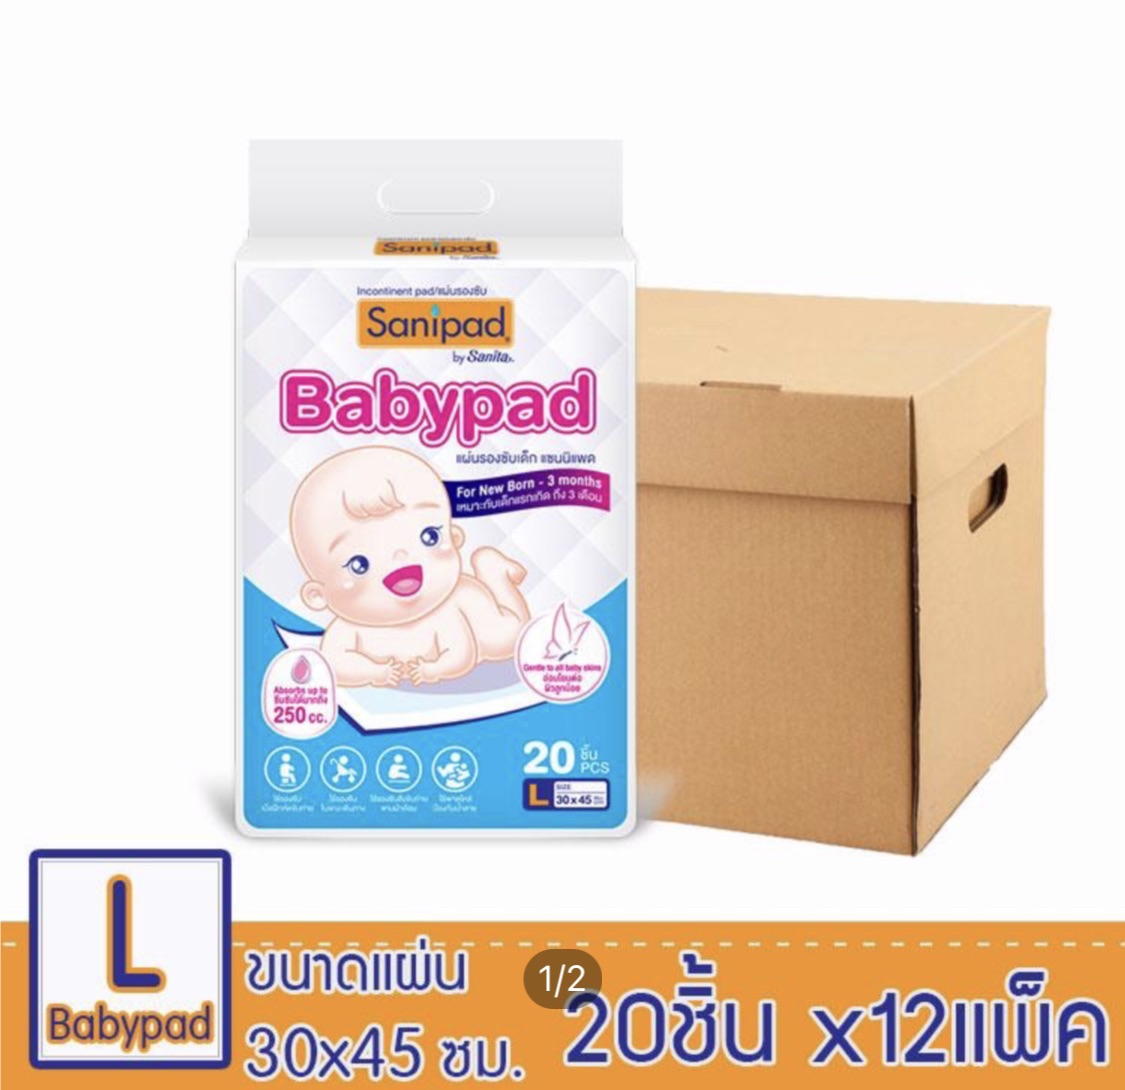 Sanipad Babypad L size (ขายยกลัง!! 12ห่อ) / แซนนิแพด แผ่นรองซับเด็ก (ไซส์ L : 30 x 45 ซม.) 20ชิ้น/ห่อ